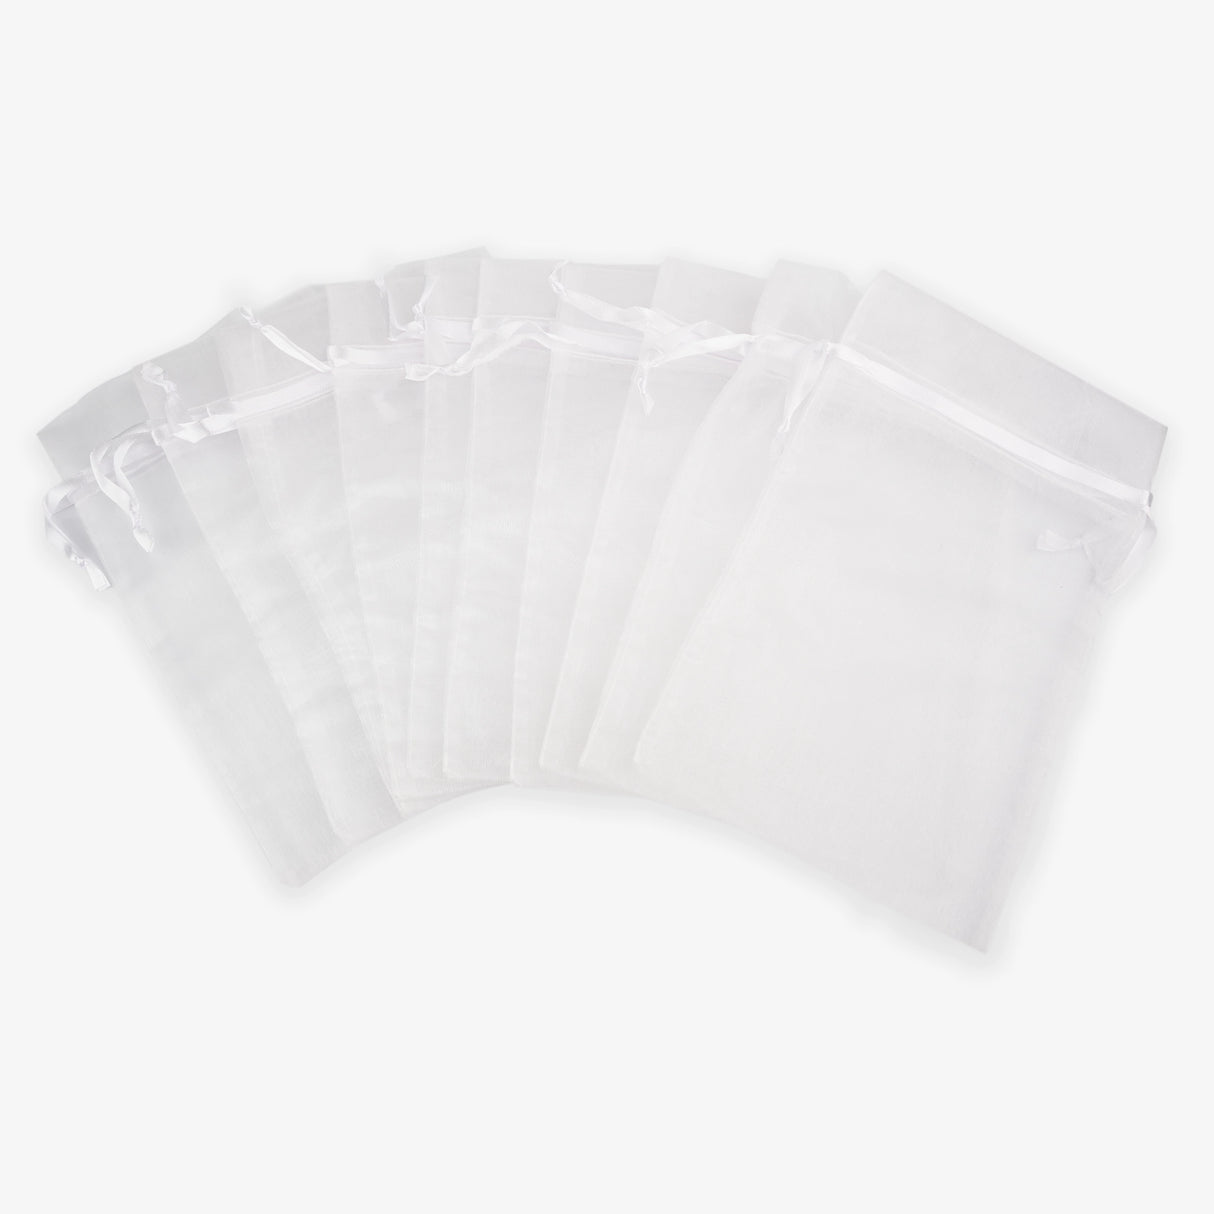 organza bags white